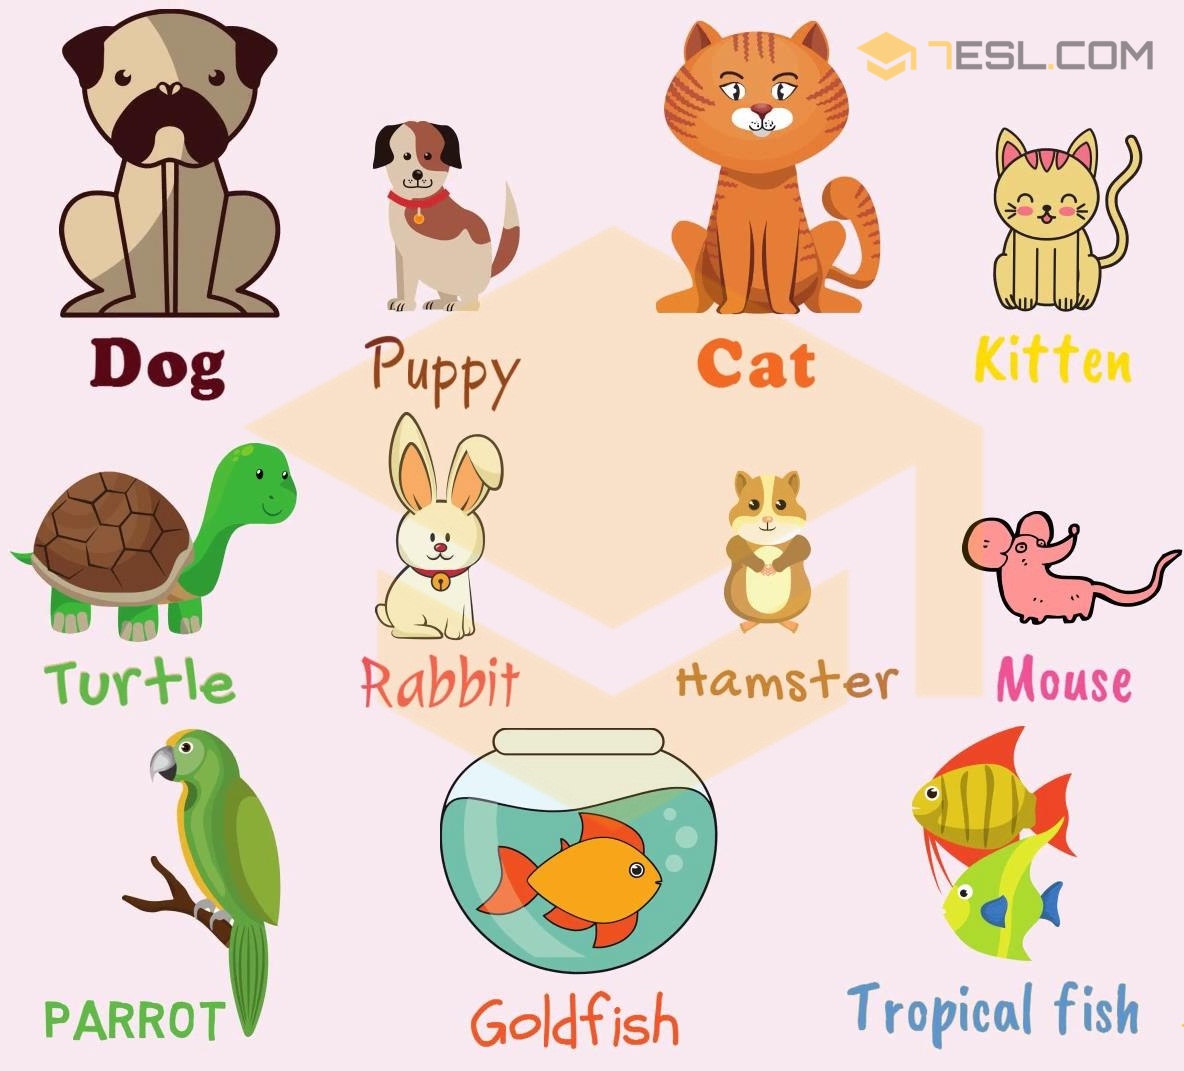 Pet clipart pet animal, Pet pet animal Transparent FREE for download on